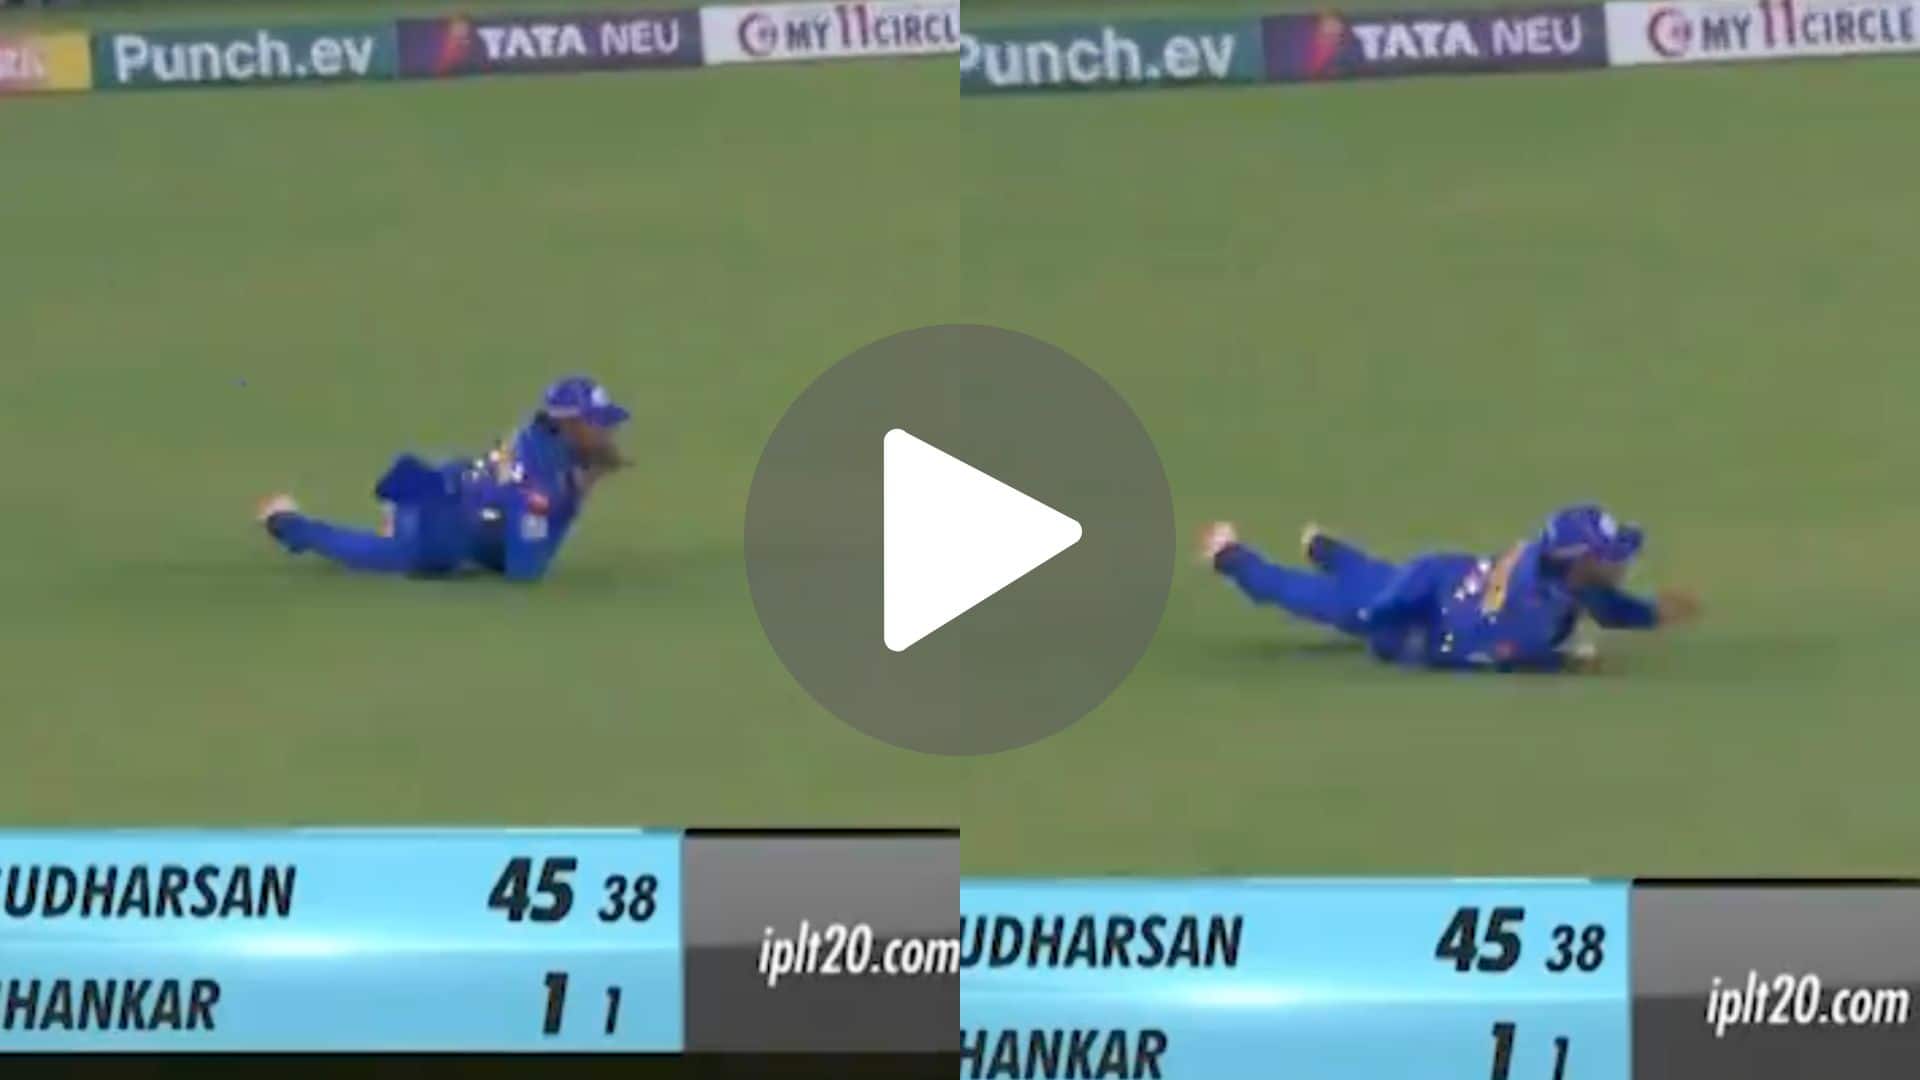 [Watch] Tilak Varma Grabs A Stunner As Bumrah Gets Sudharsan In MI vs GT IPL Match